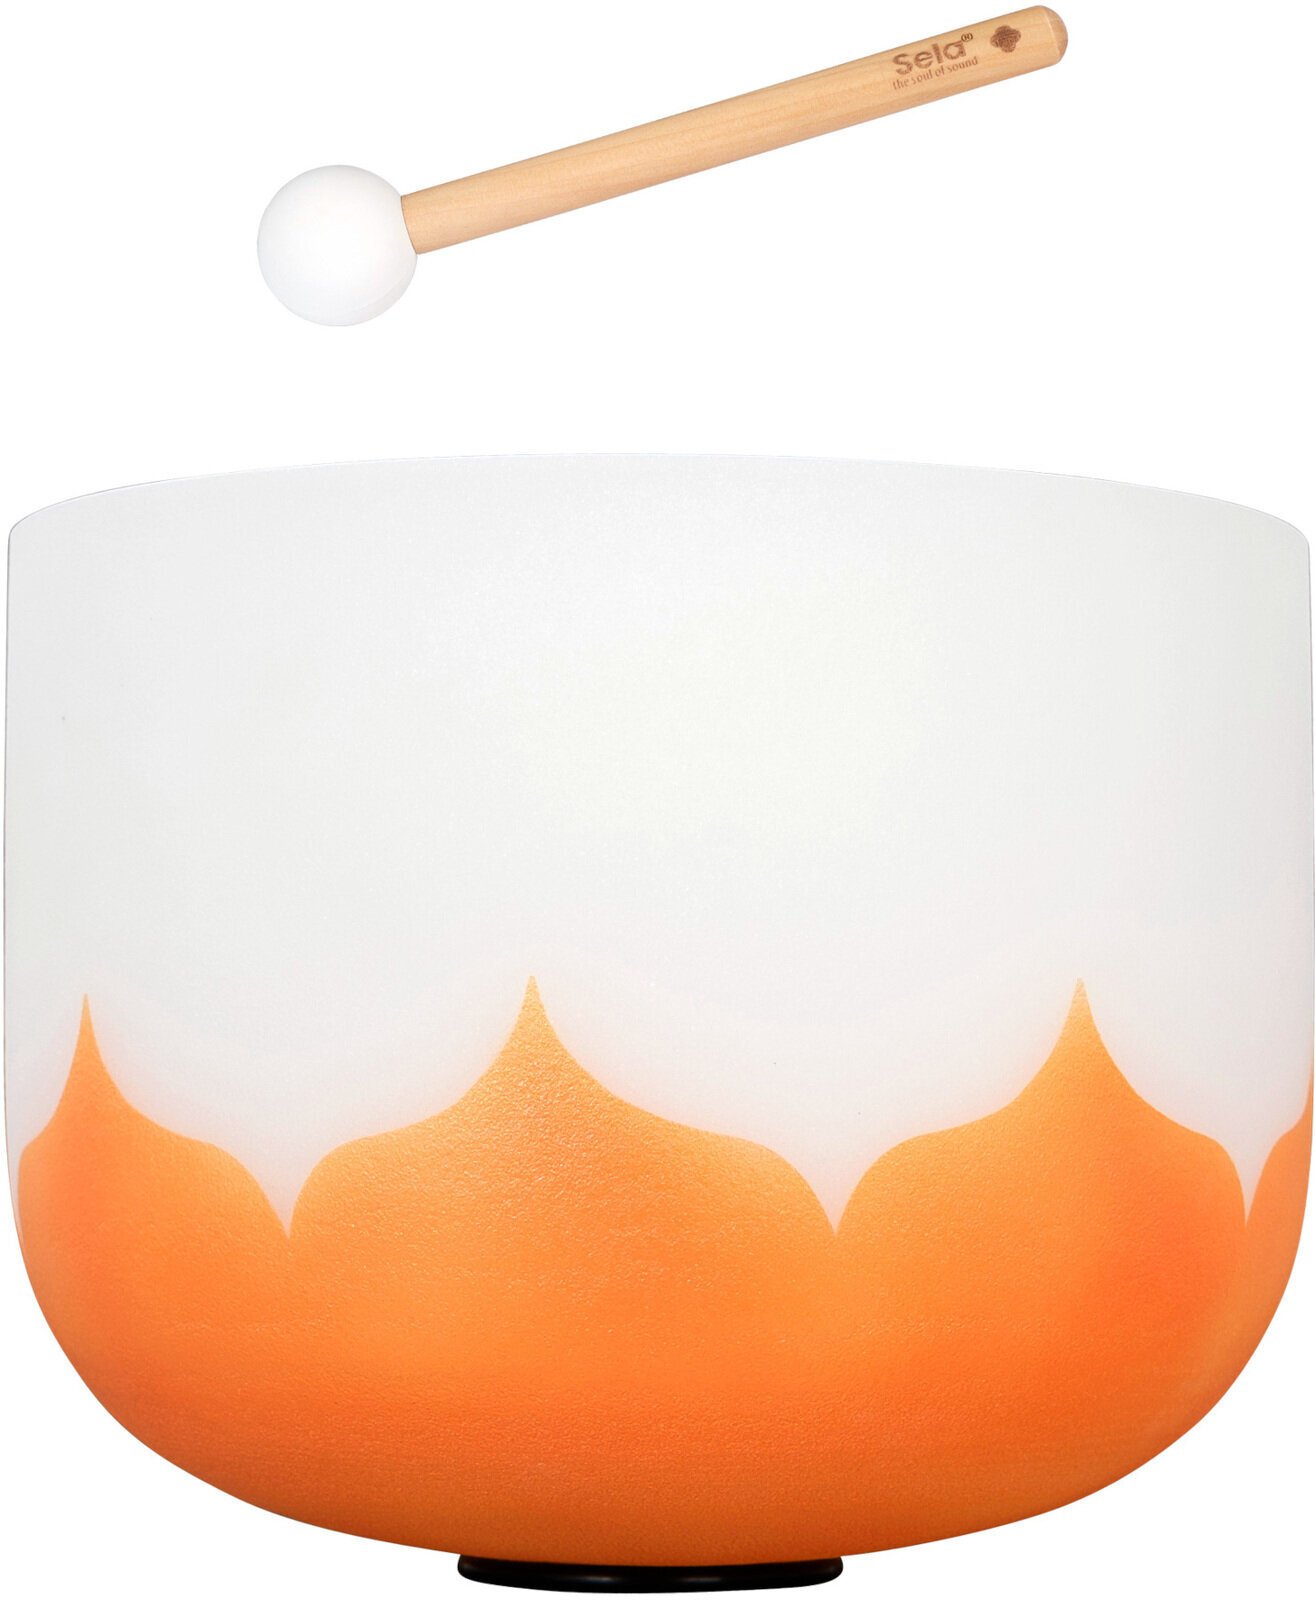 Perkusja dla terapii muzycznej Sela 10" Crystal Singing Bowl Lotus 432 Hz D - Orange (Sacral Chakra) incl. 1 Wood Mallet